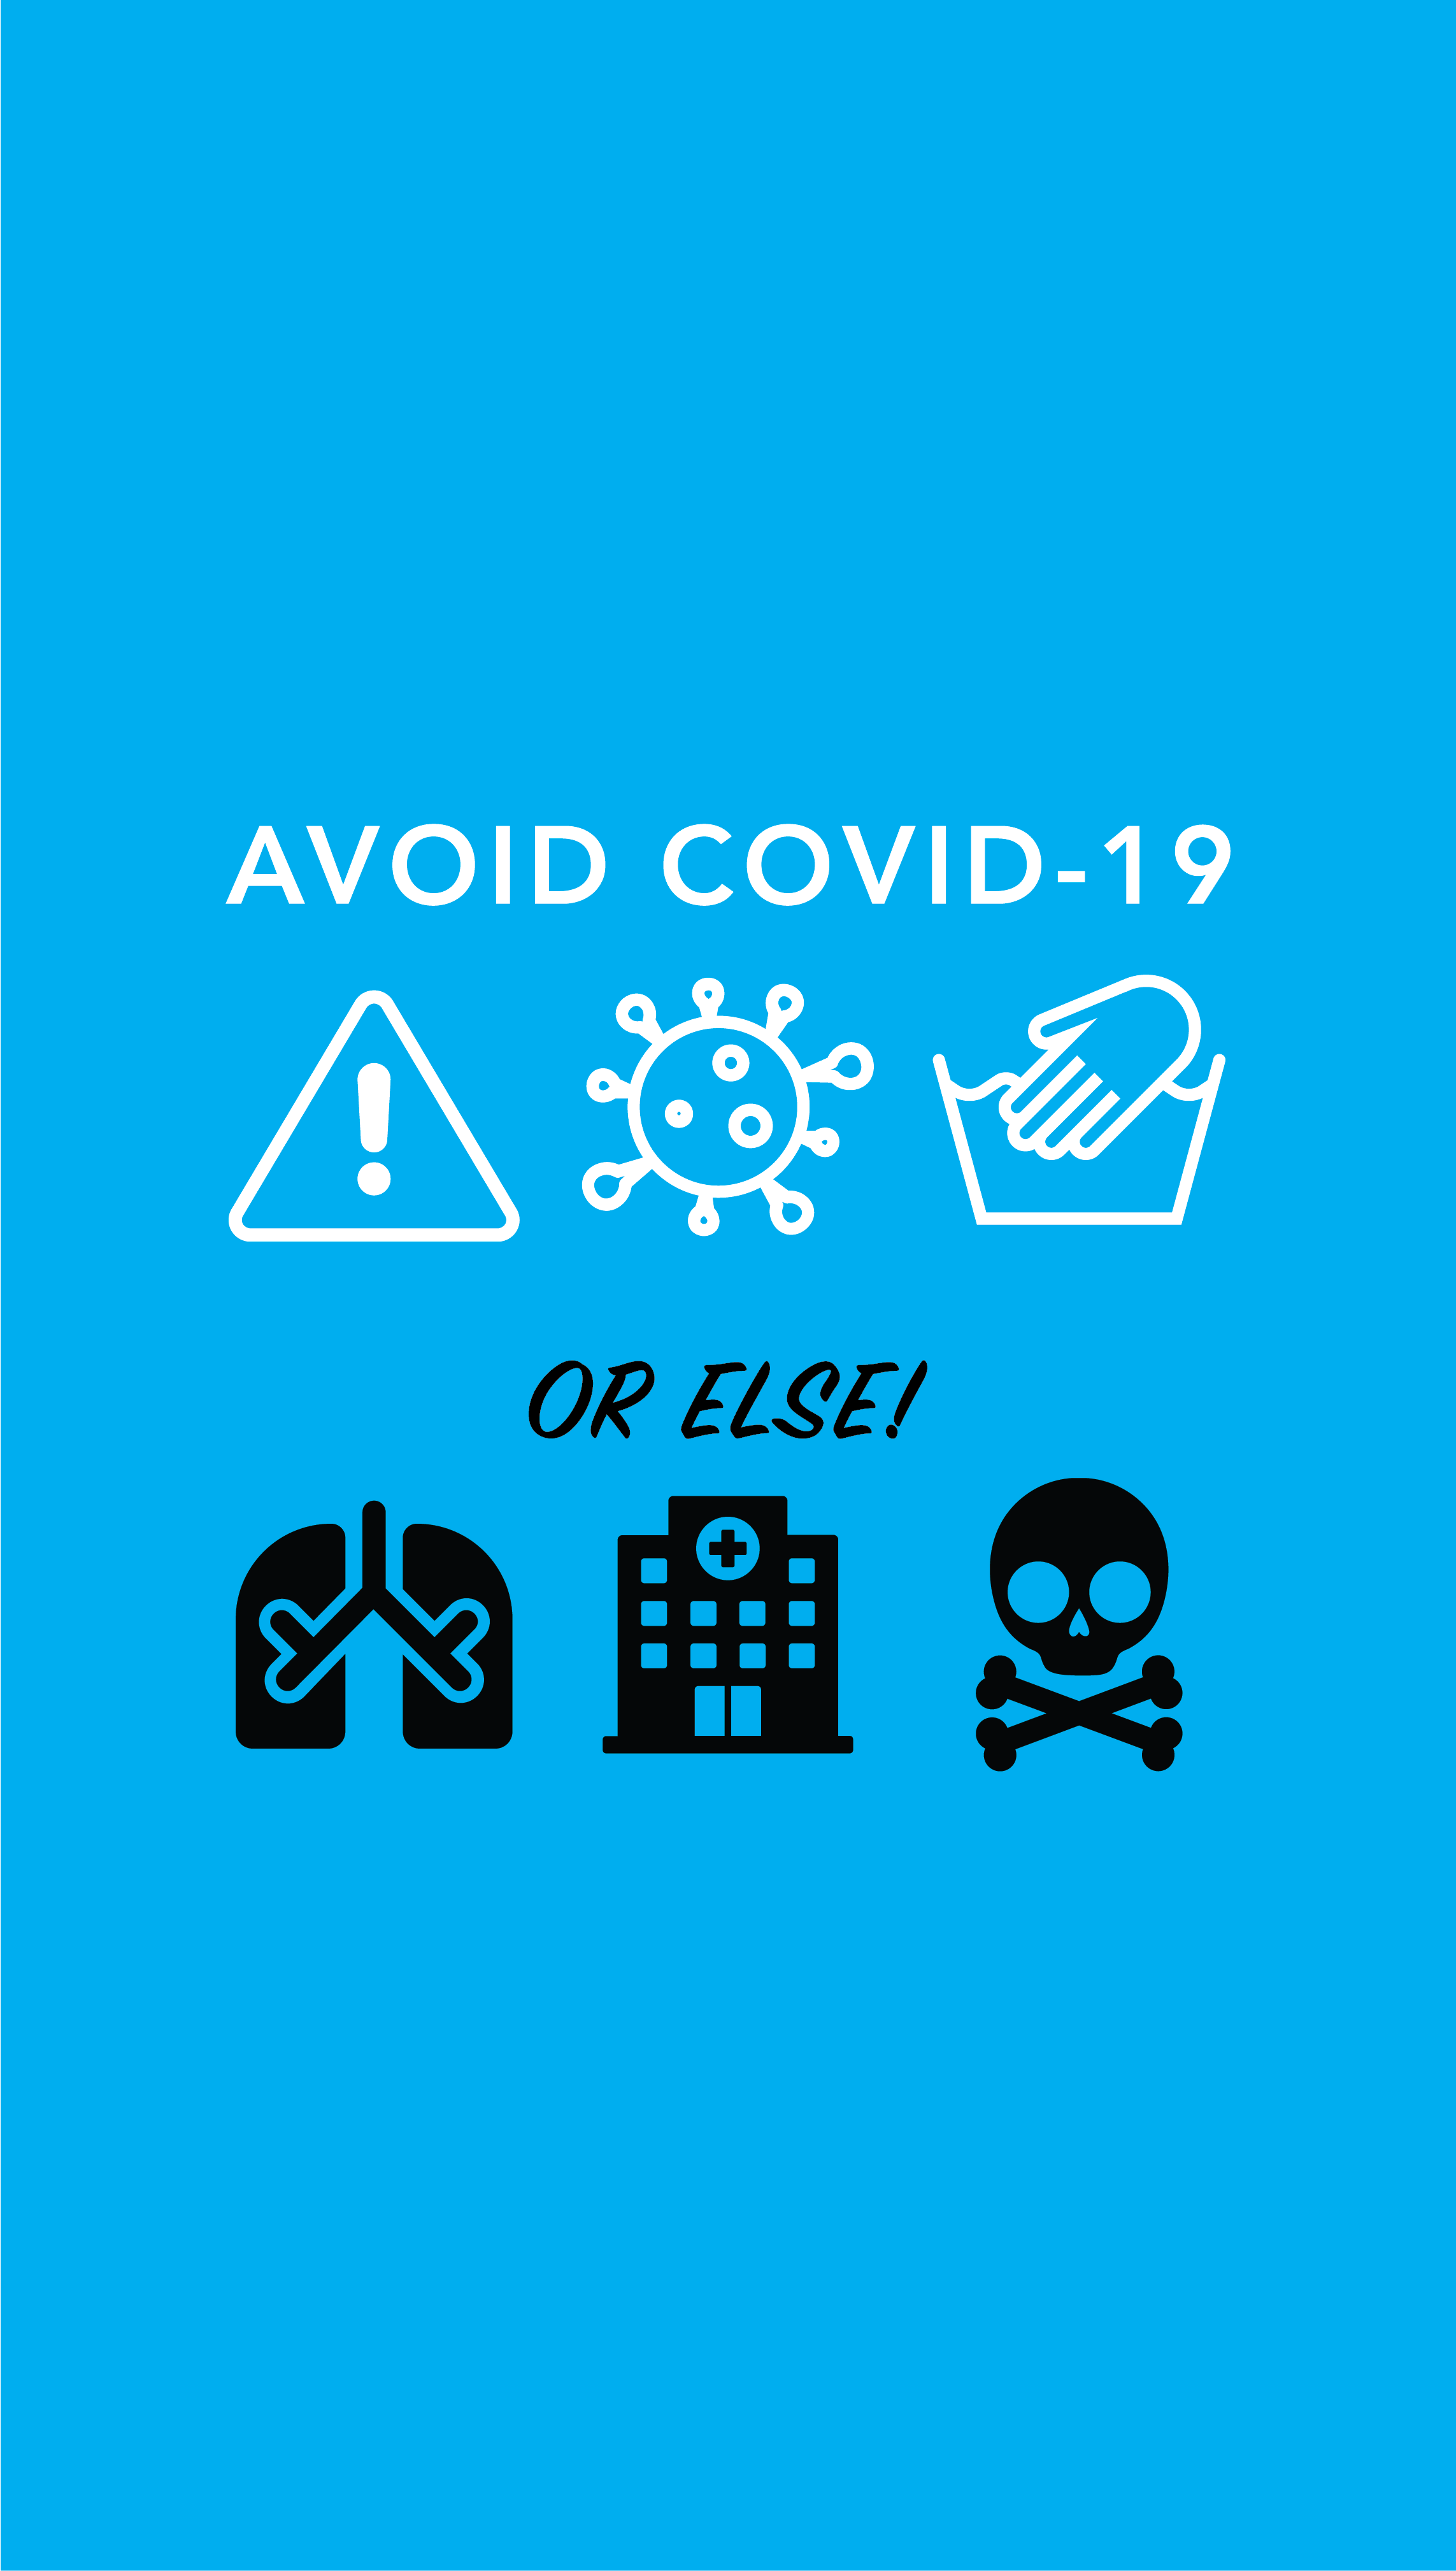 Avoid COVID-19 or else!